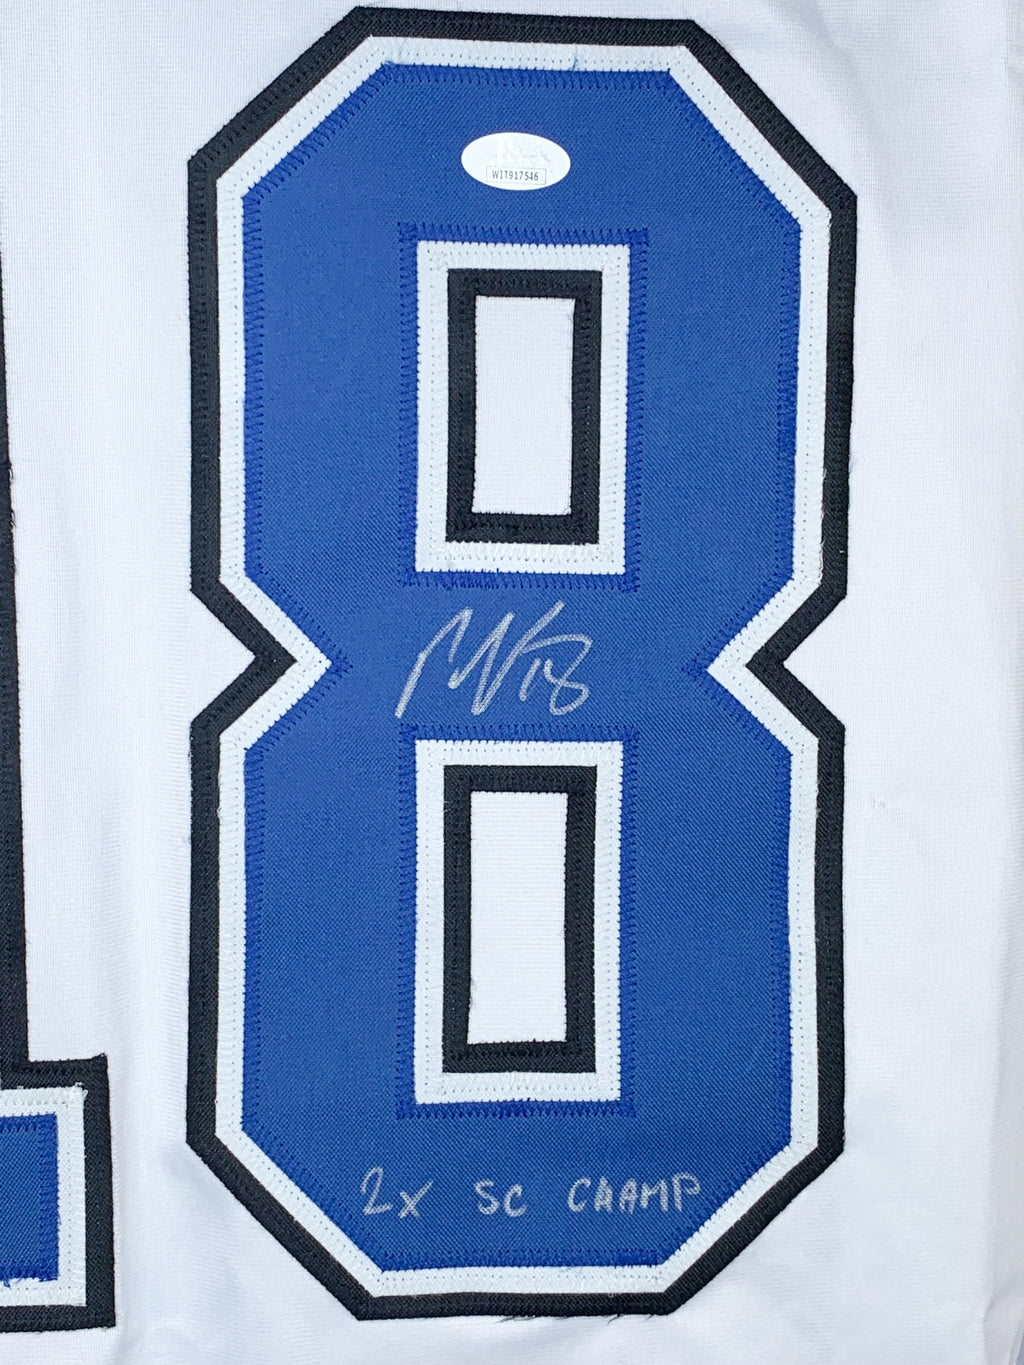 Ondrej Palat autograph insc Mini Stanley Cup TB Lightning JSA Game Used Ice